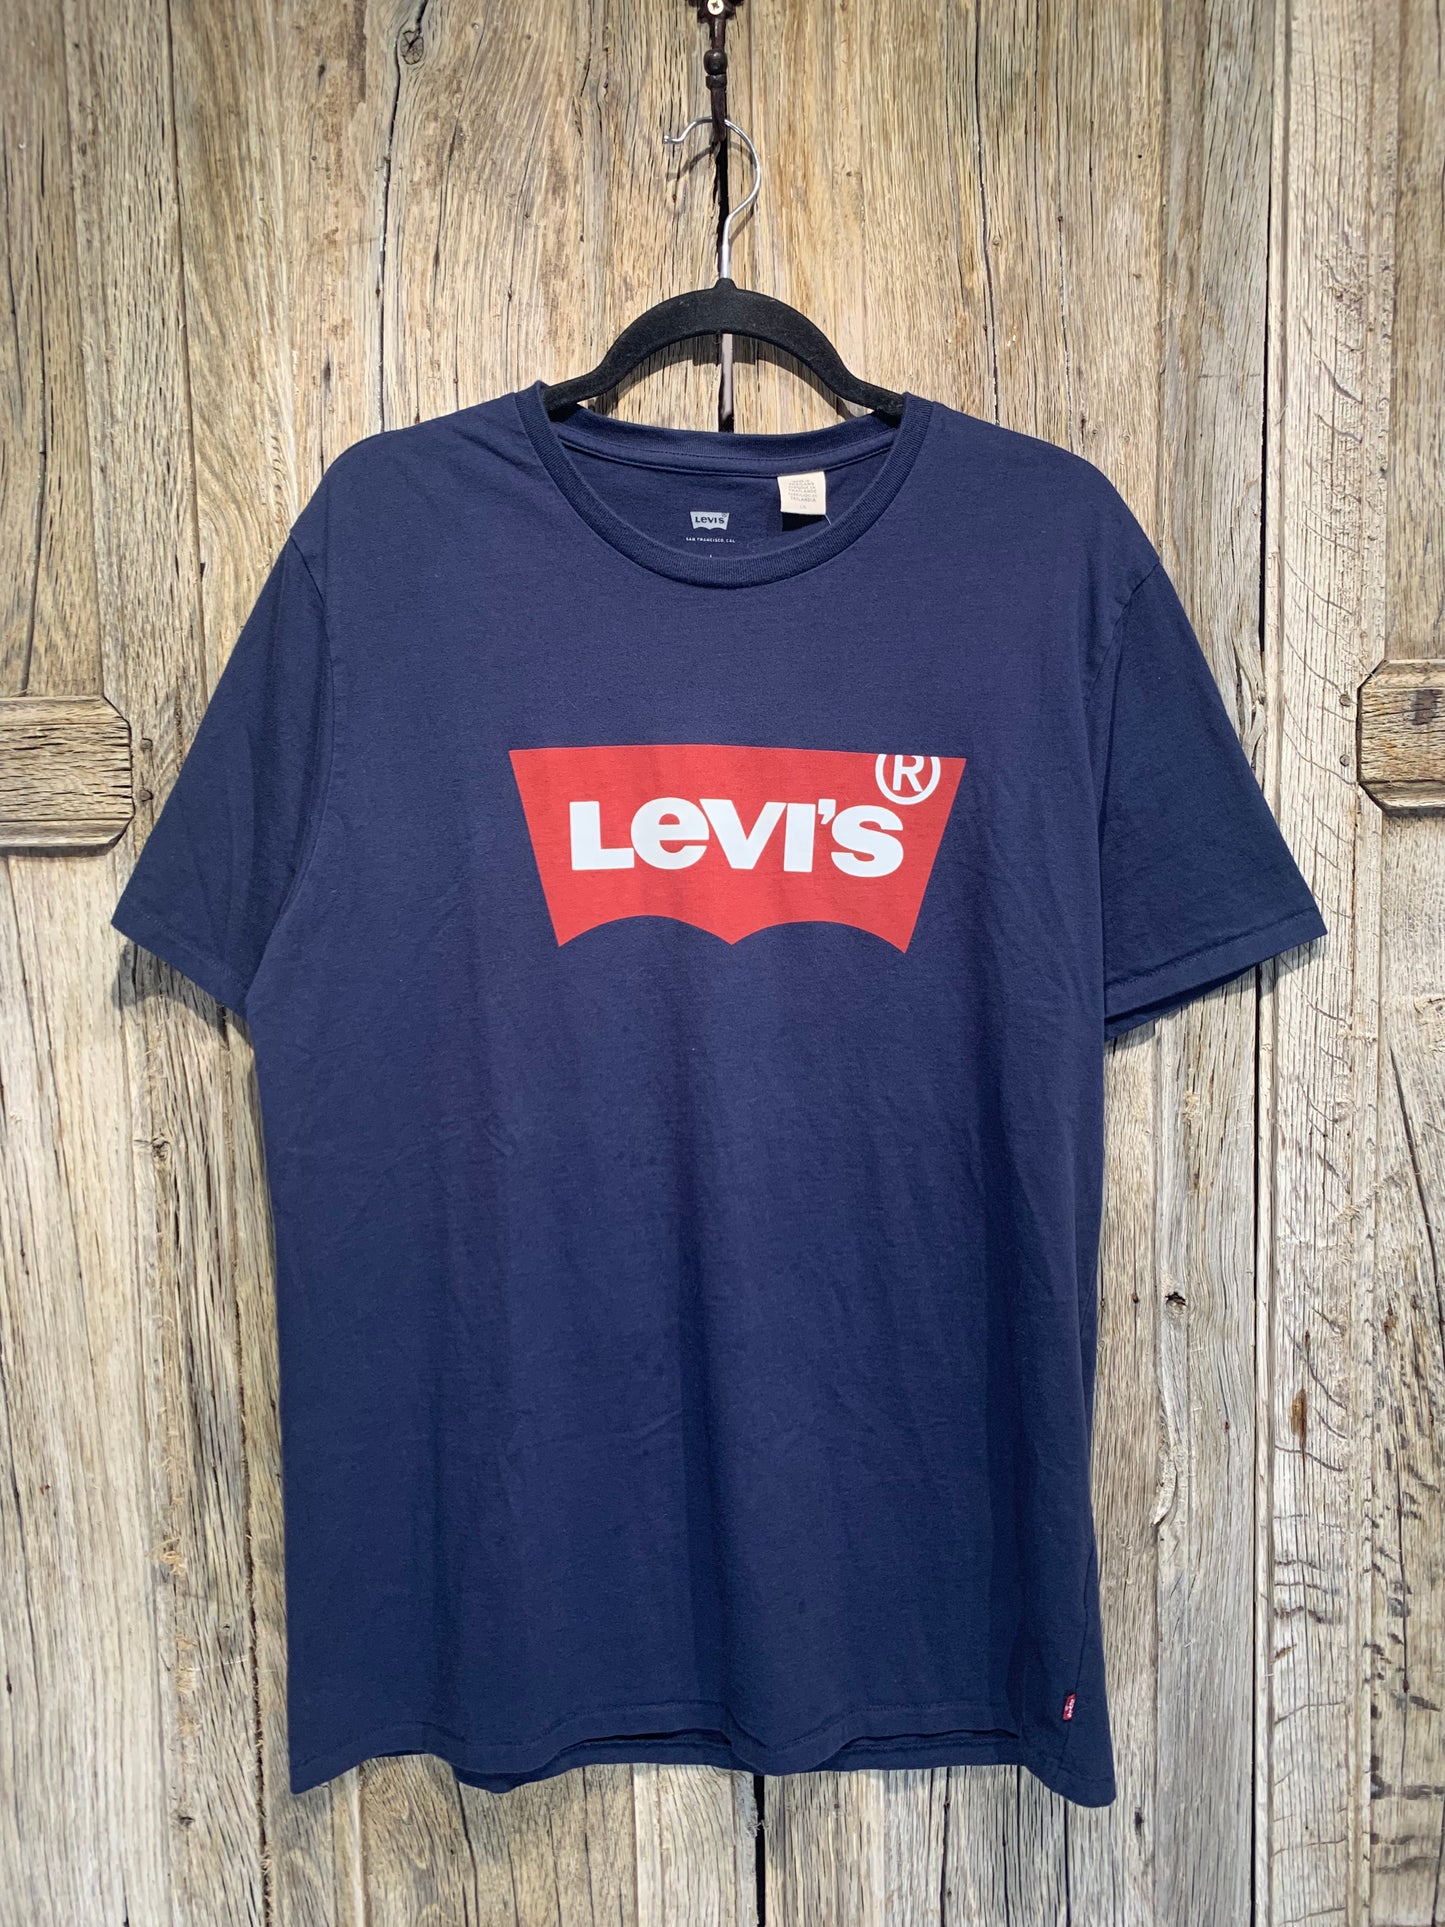 Levi’s Navy Logo Top